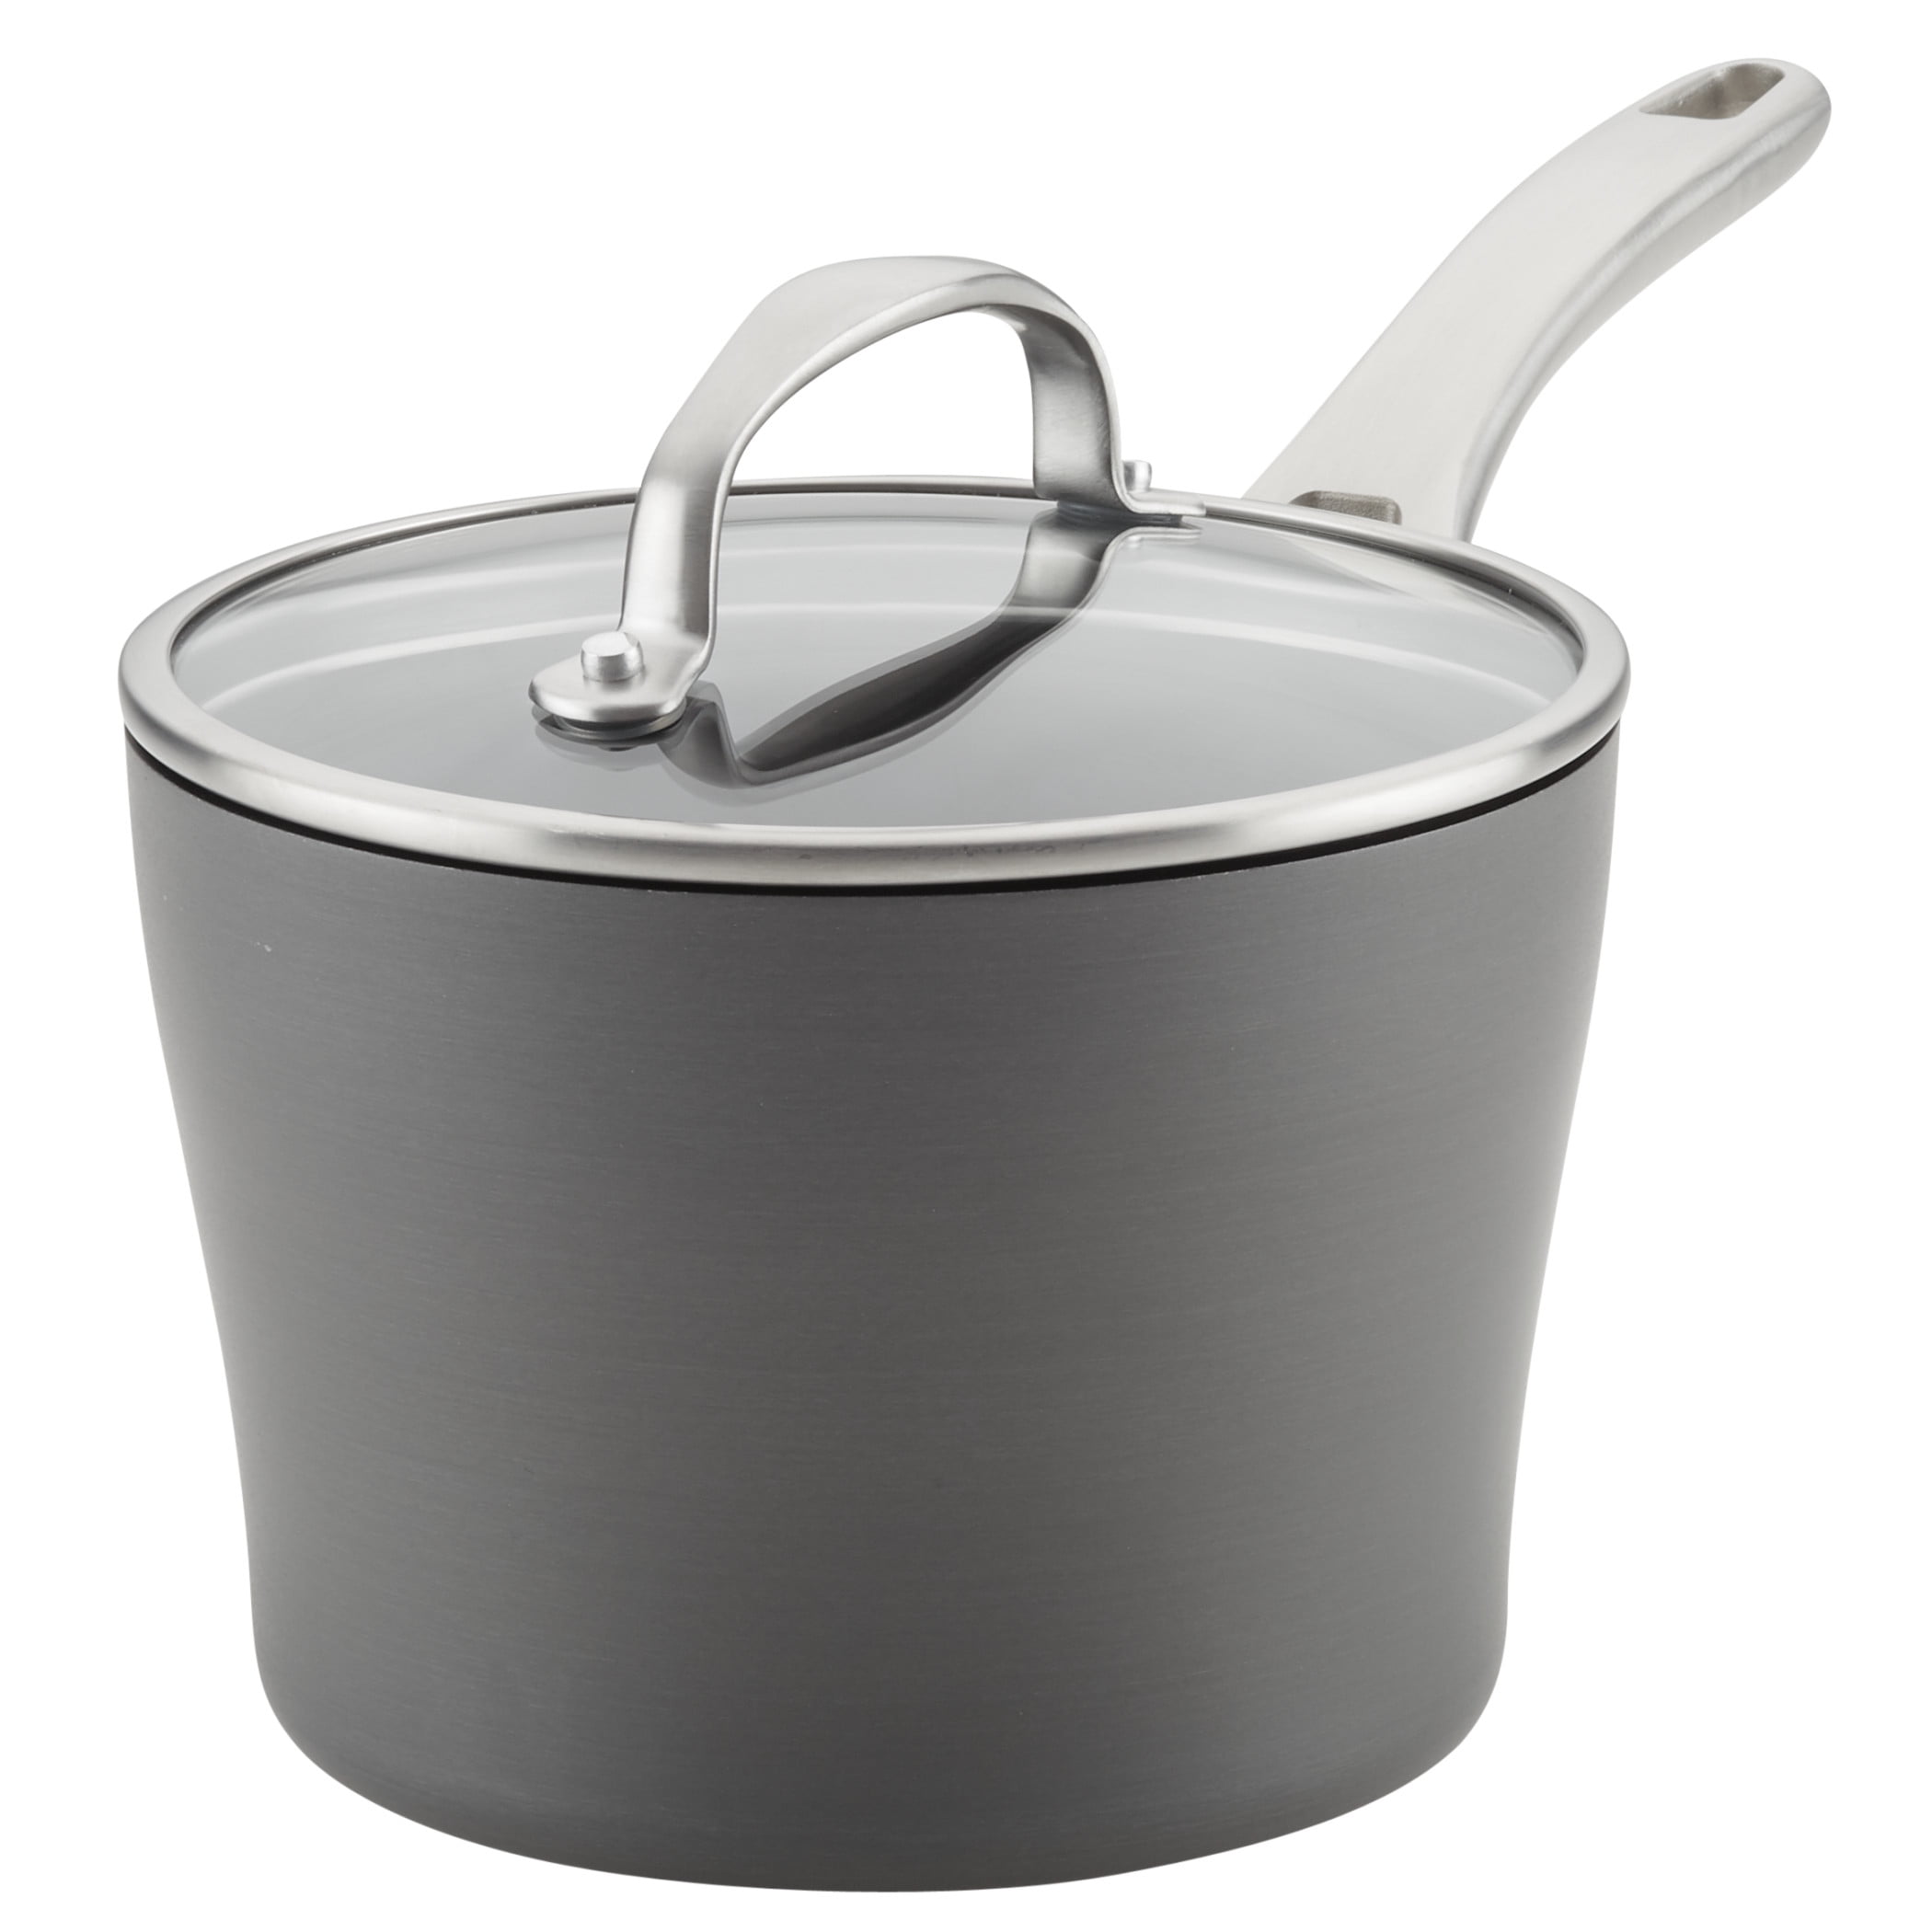 Aluminum Dark Gray Anolon 81167 Allure Hard Anodized Nonstick Cookware Pots and Pans Set 